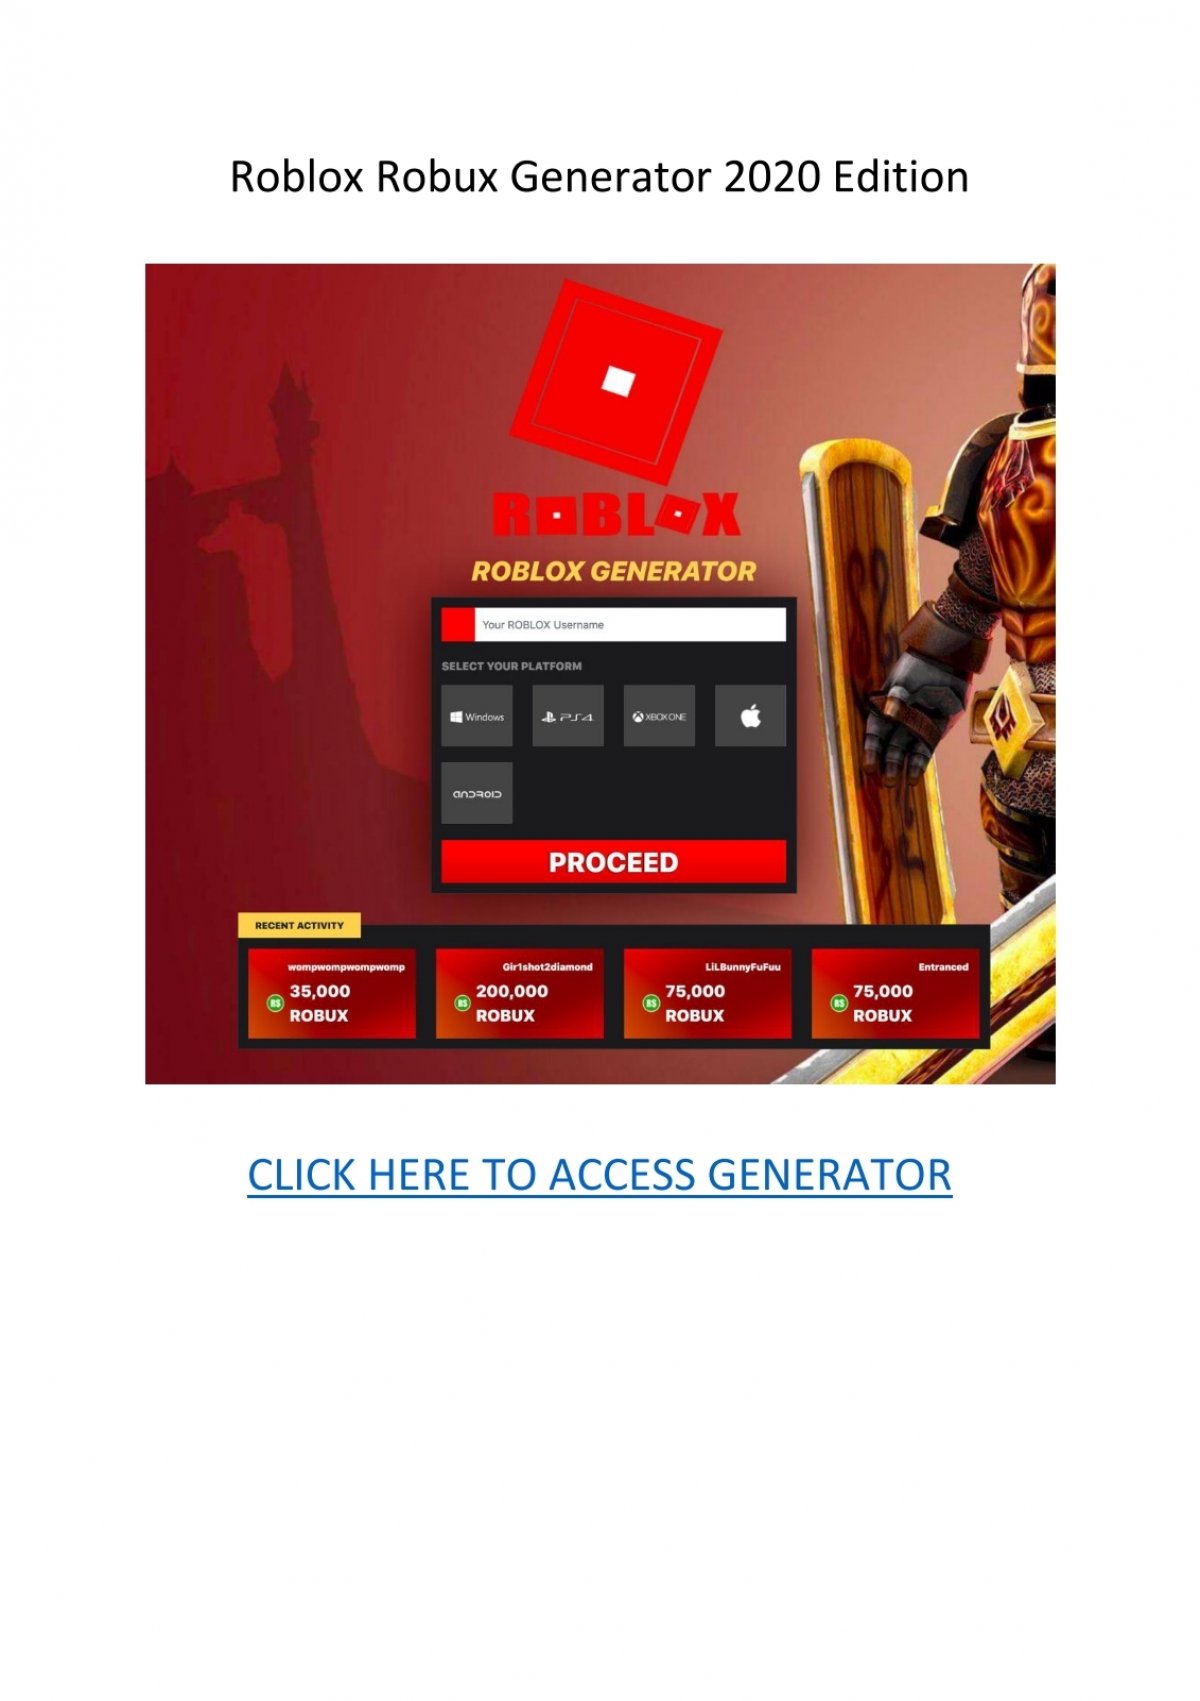 Free Robux Generator 2020 Roblox - roblox image generator